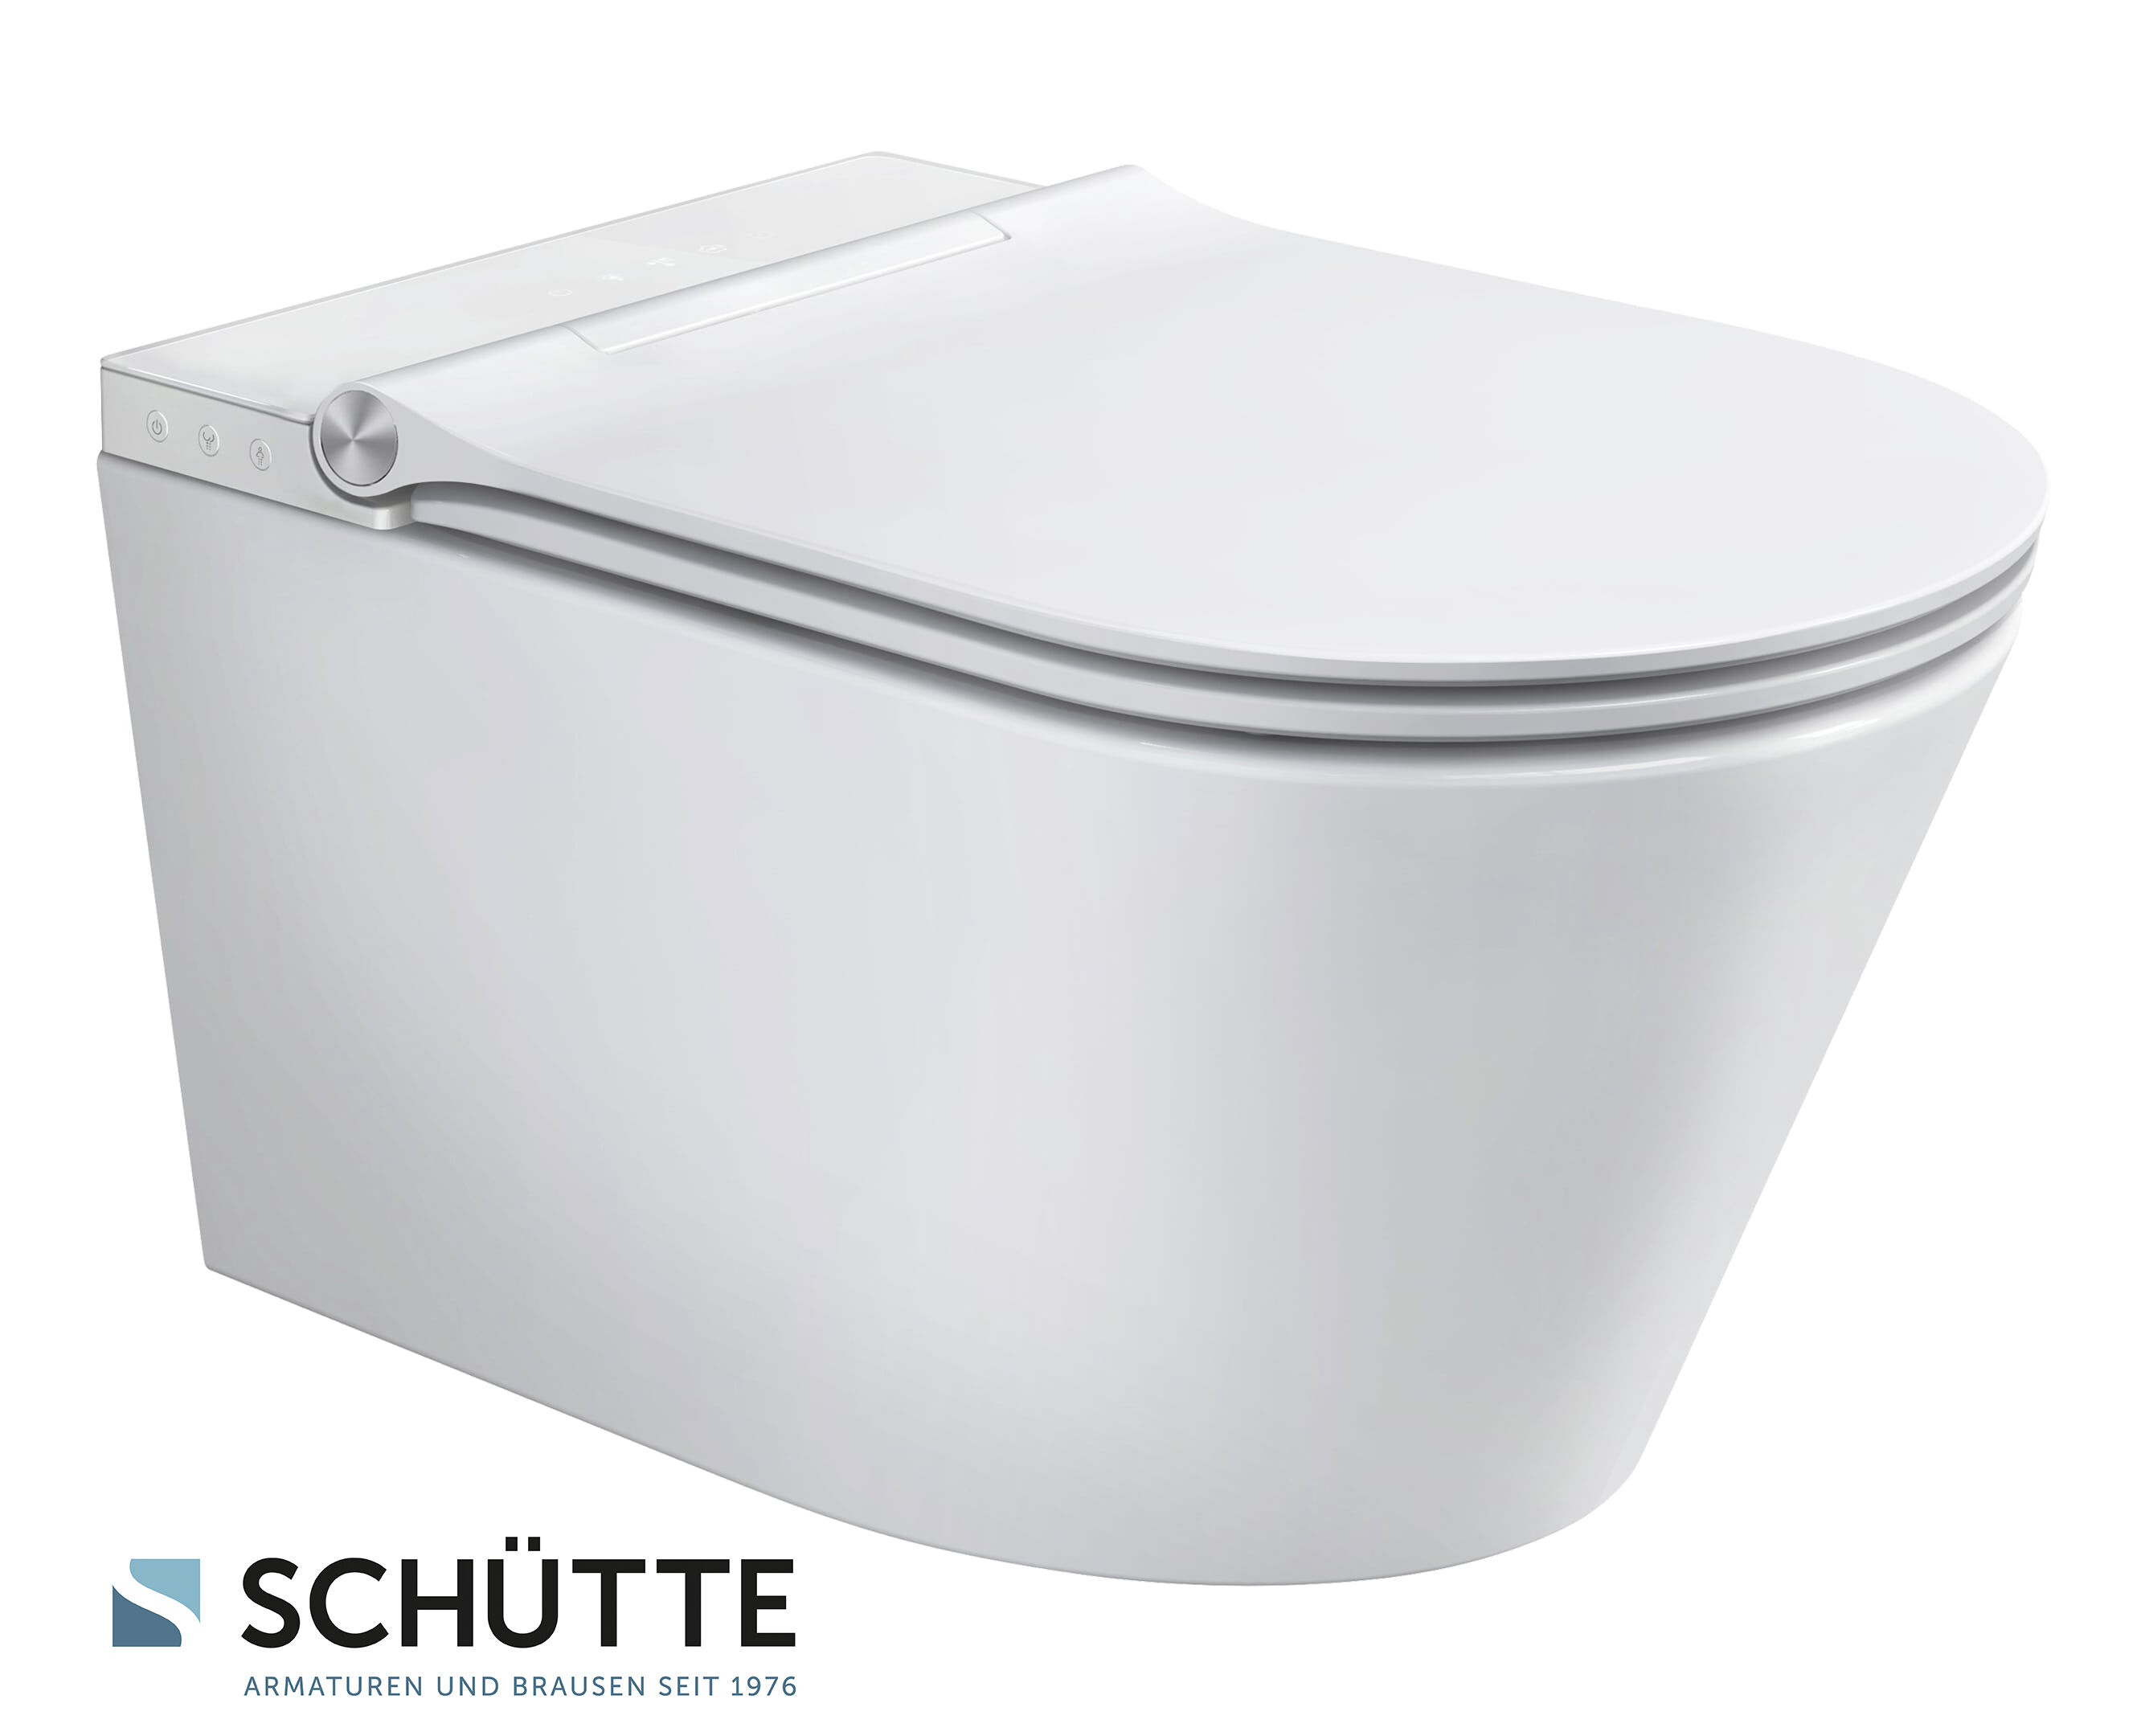 Schütte CESARI Dusch WC, spülrandlos, mit Slim WC-Sitz | BadeDu